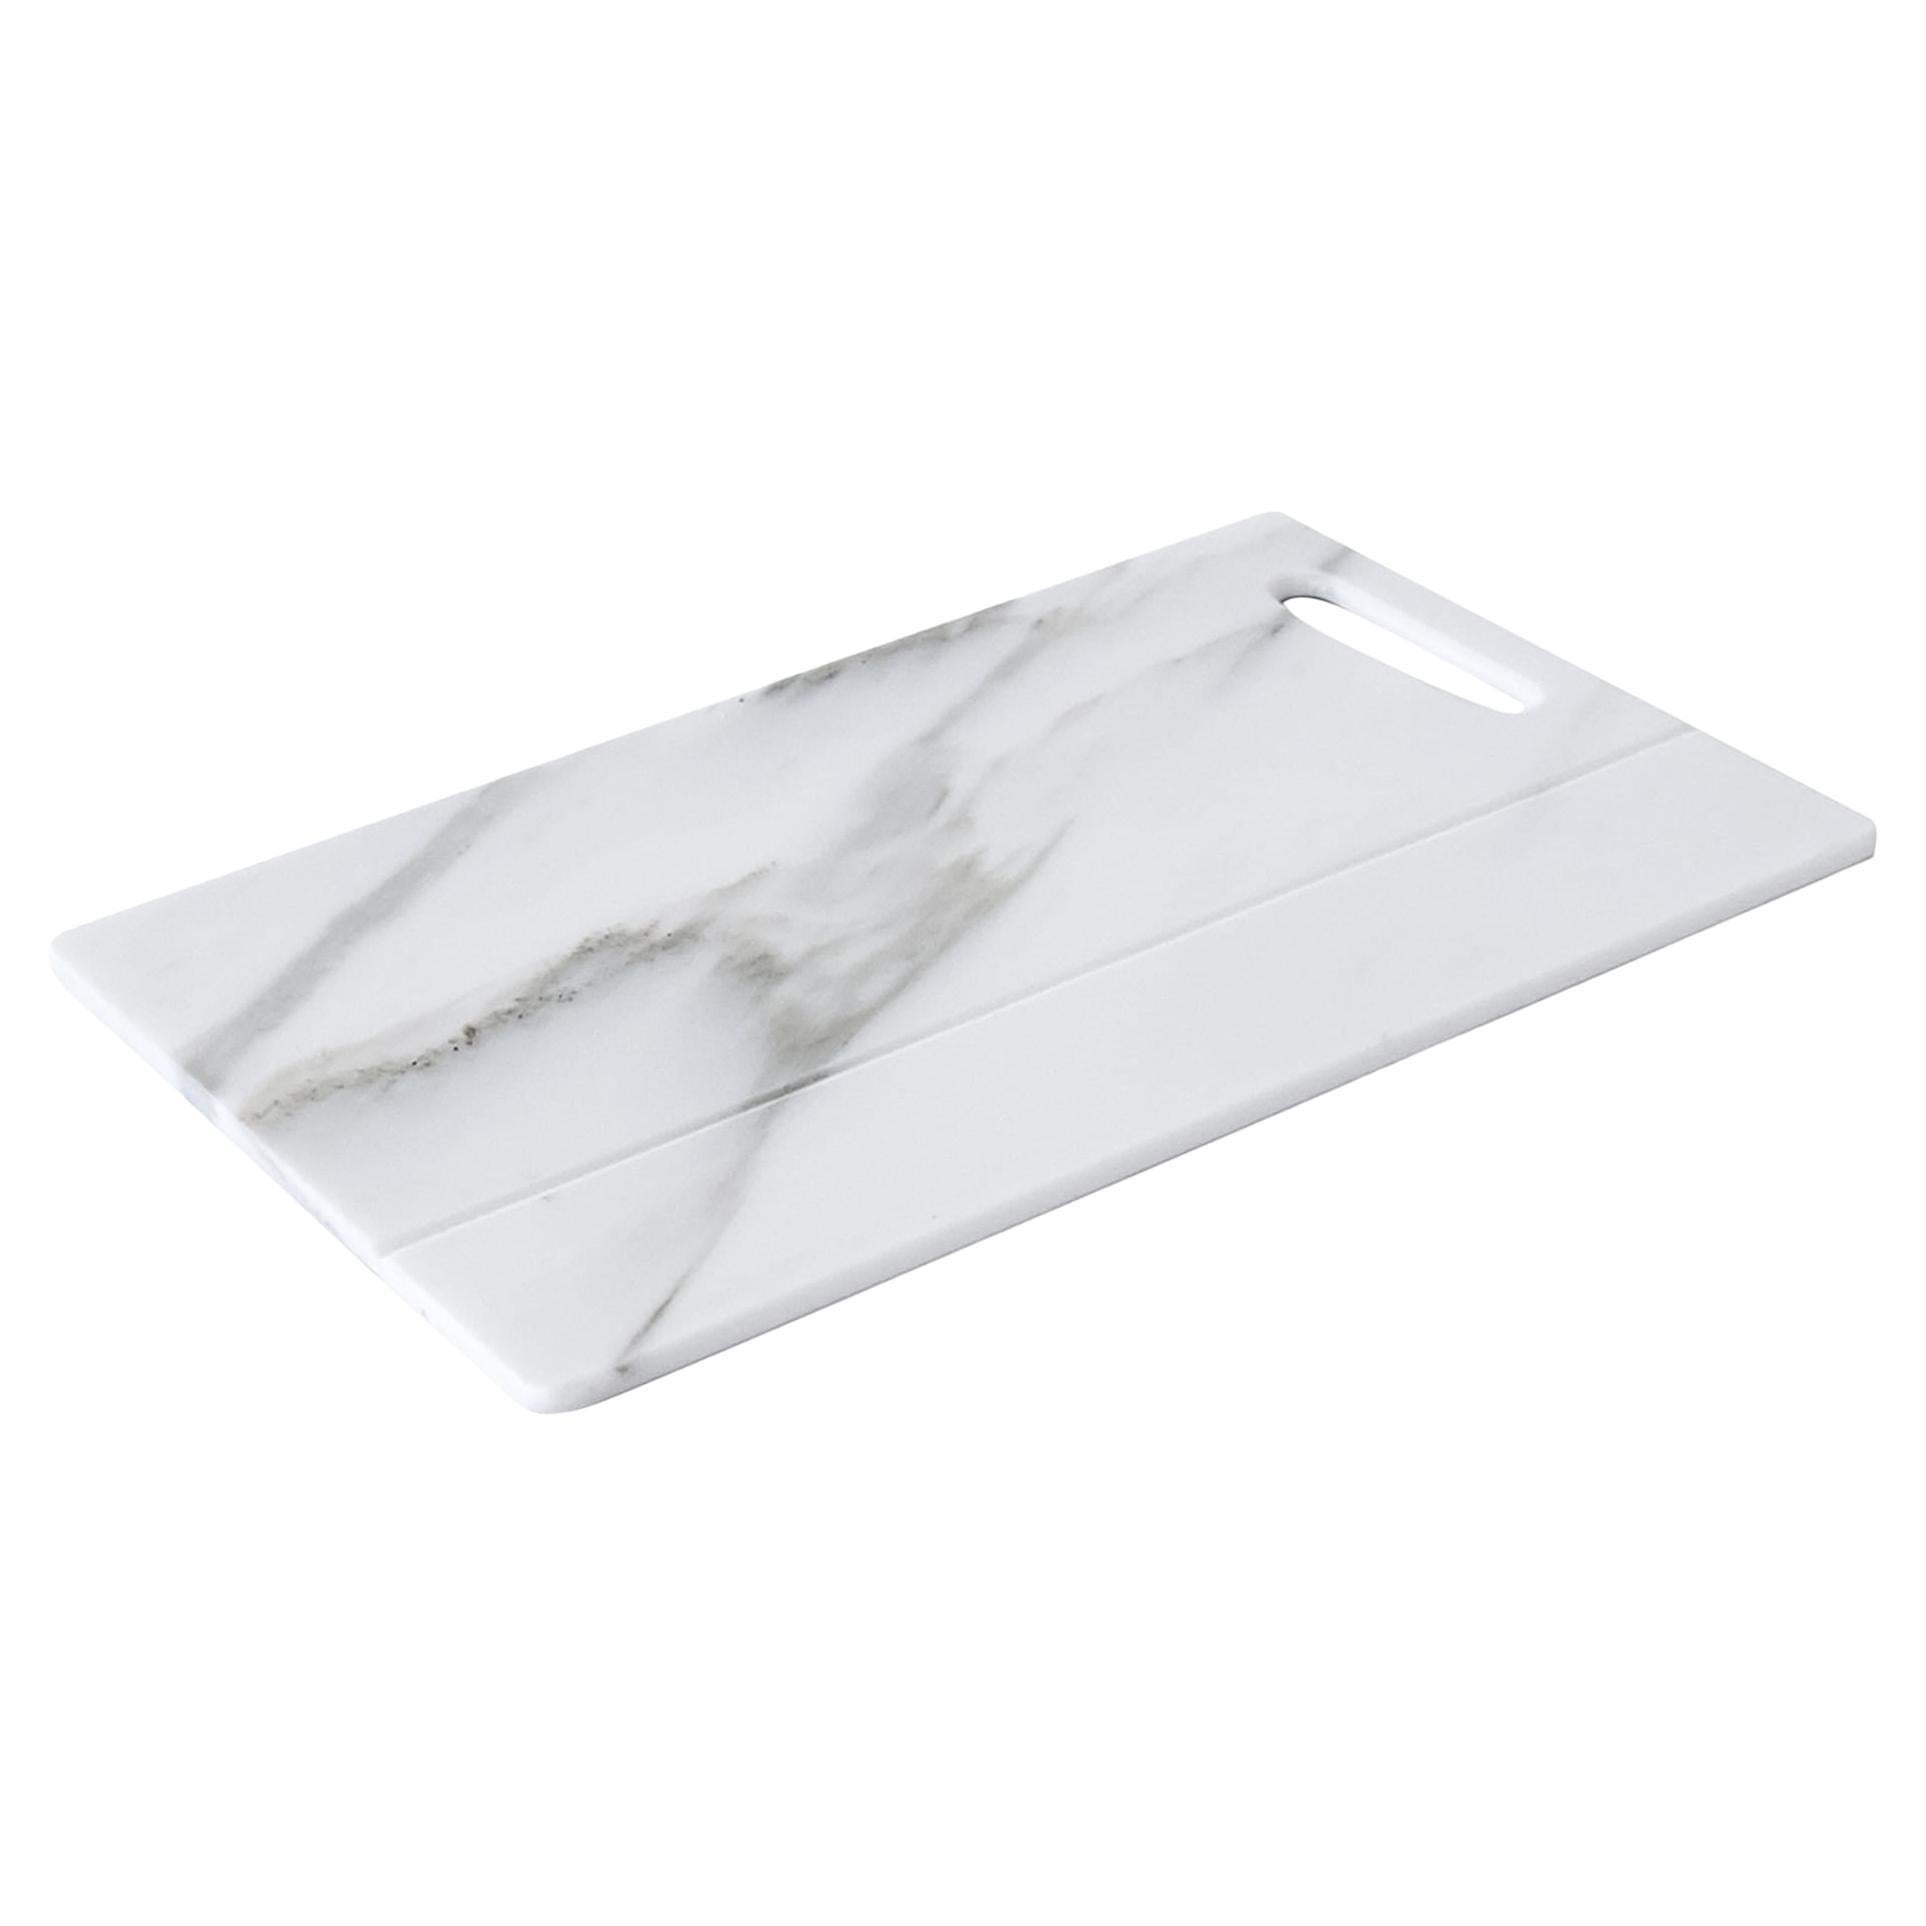 White Carrara marble big squared chopping board For Sale